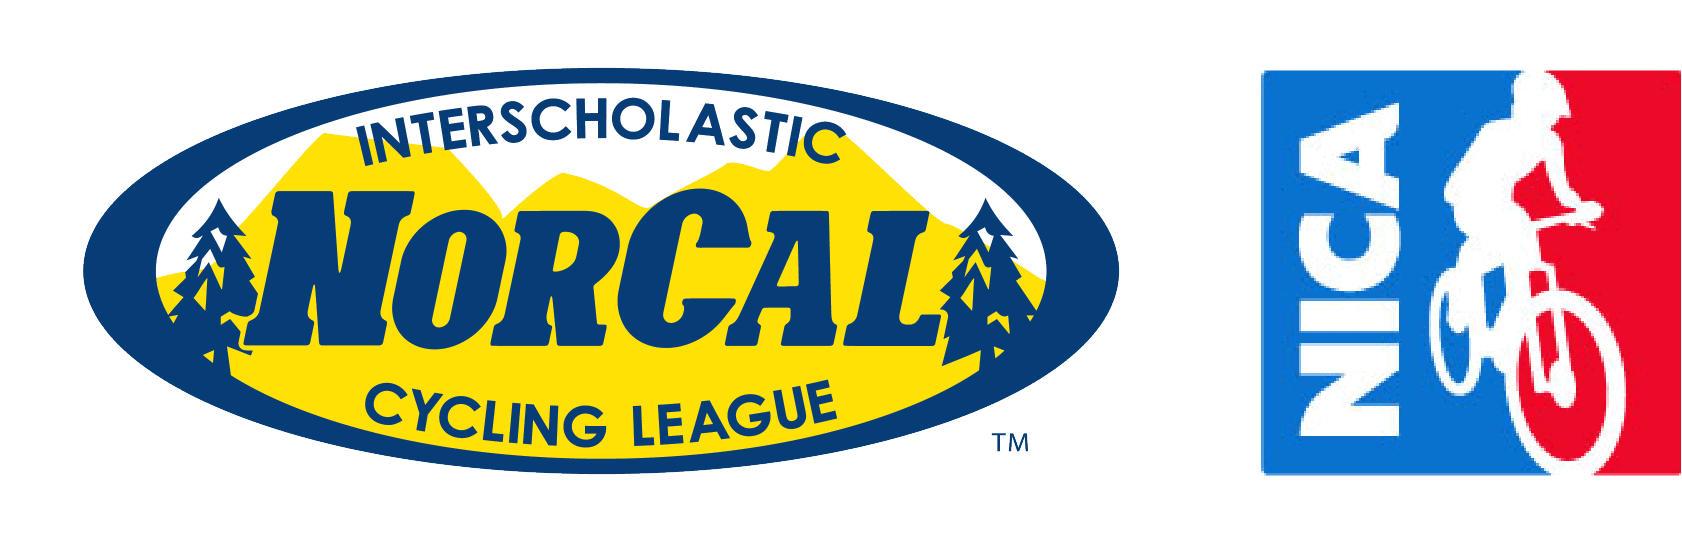 Norcal Interscholastic Cycling League